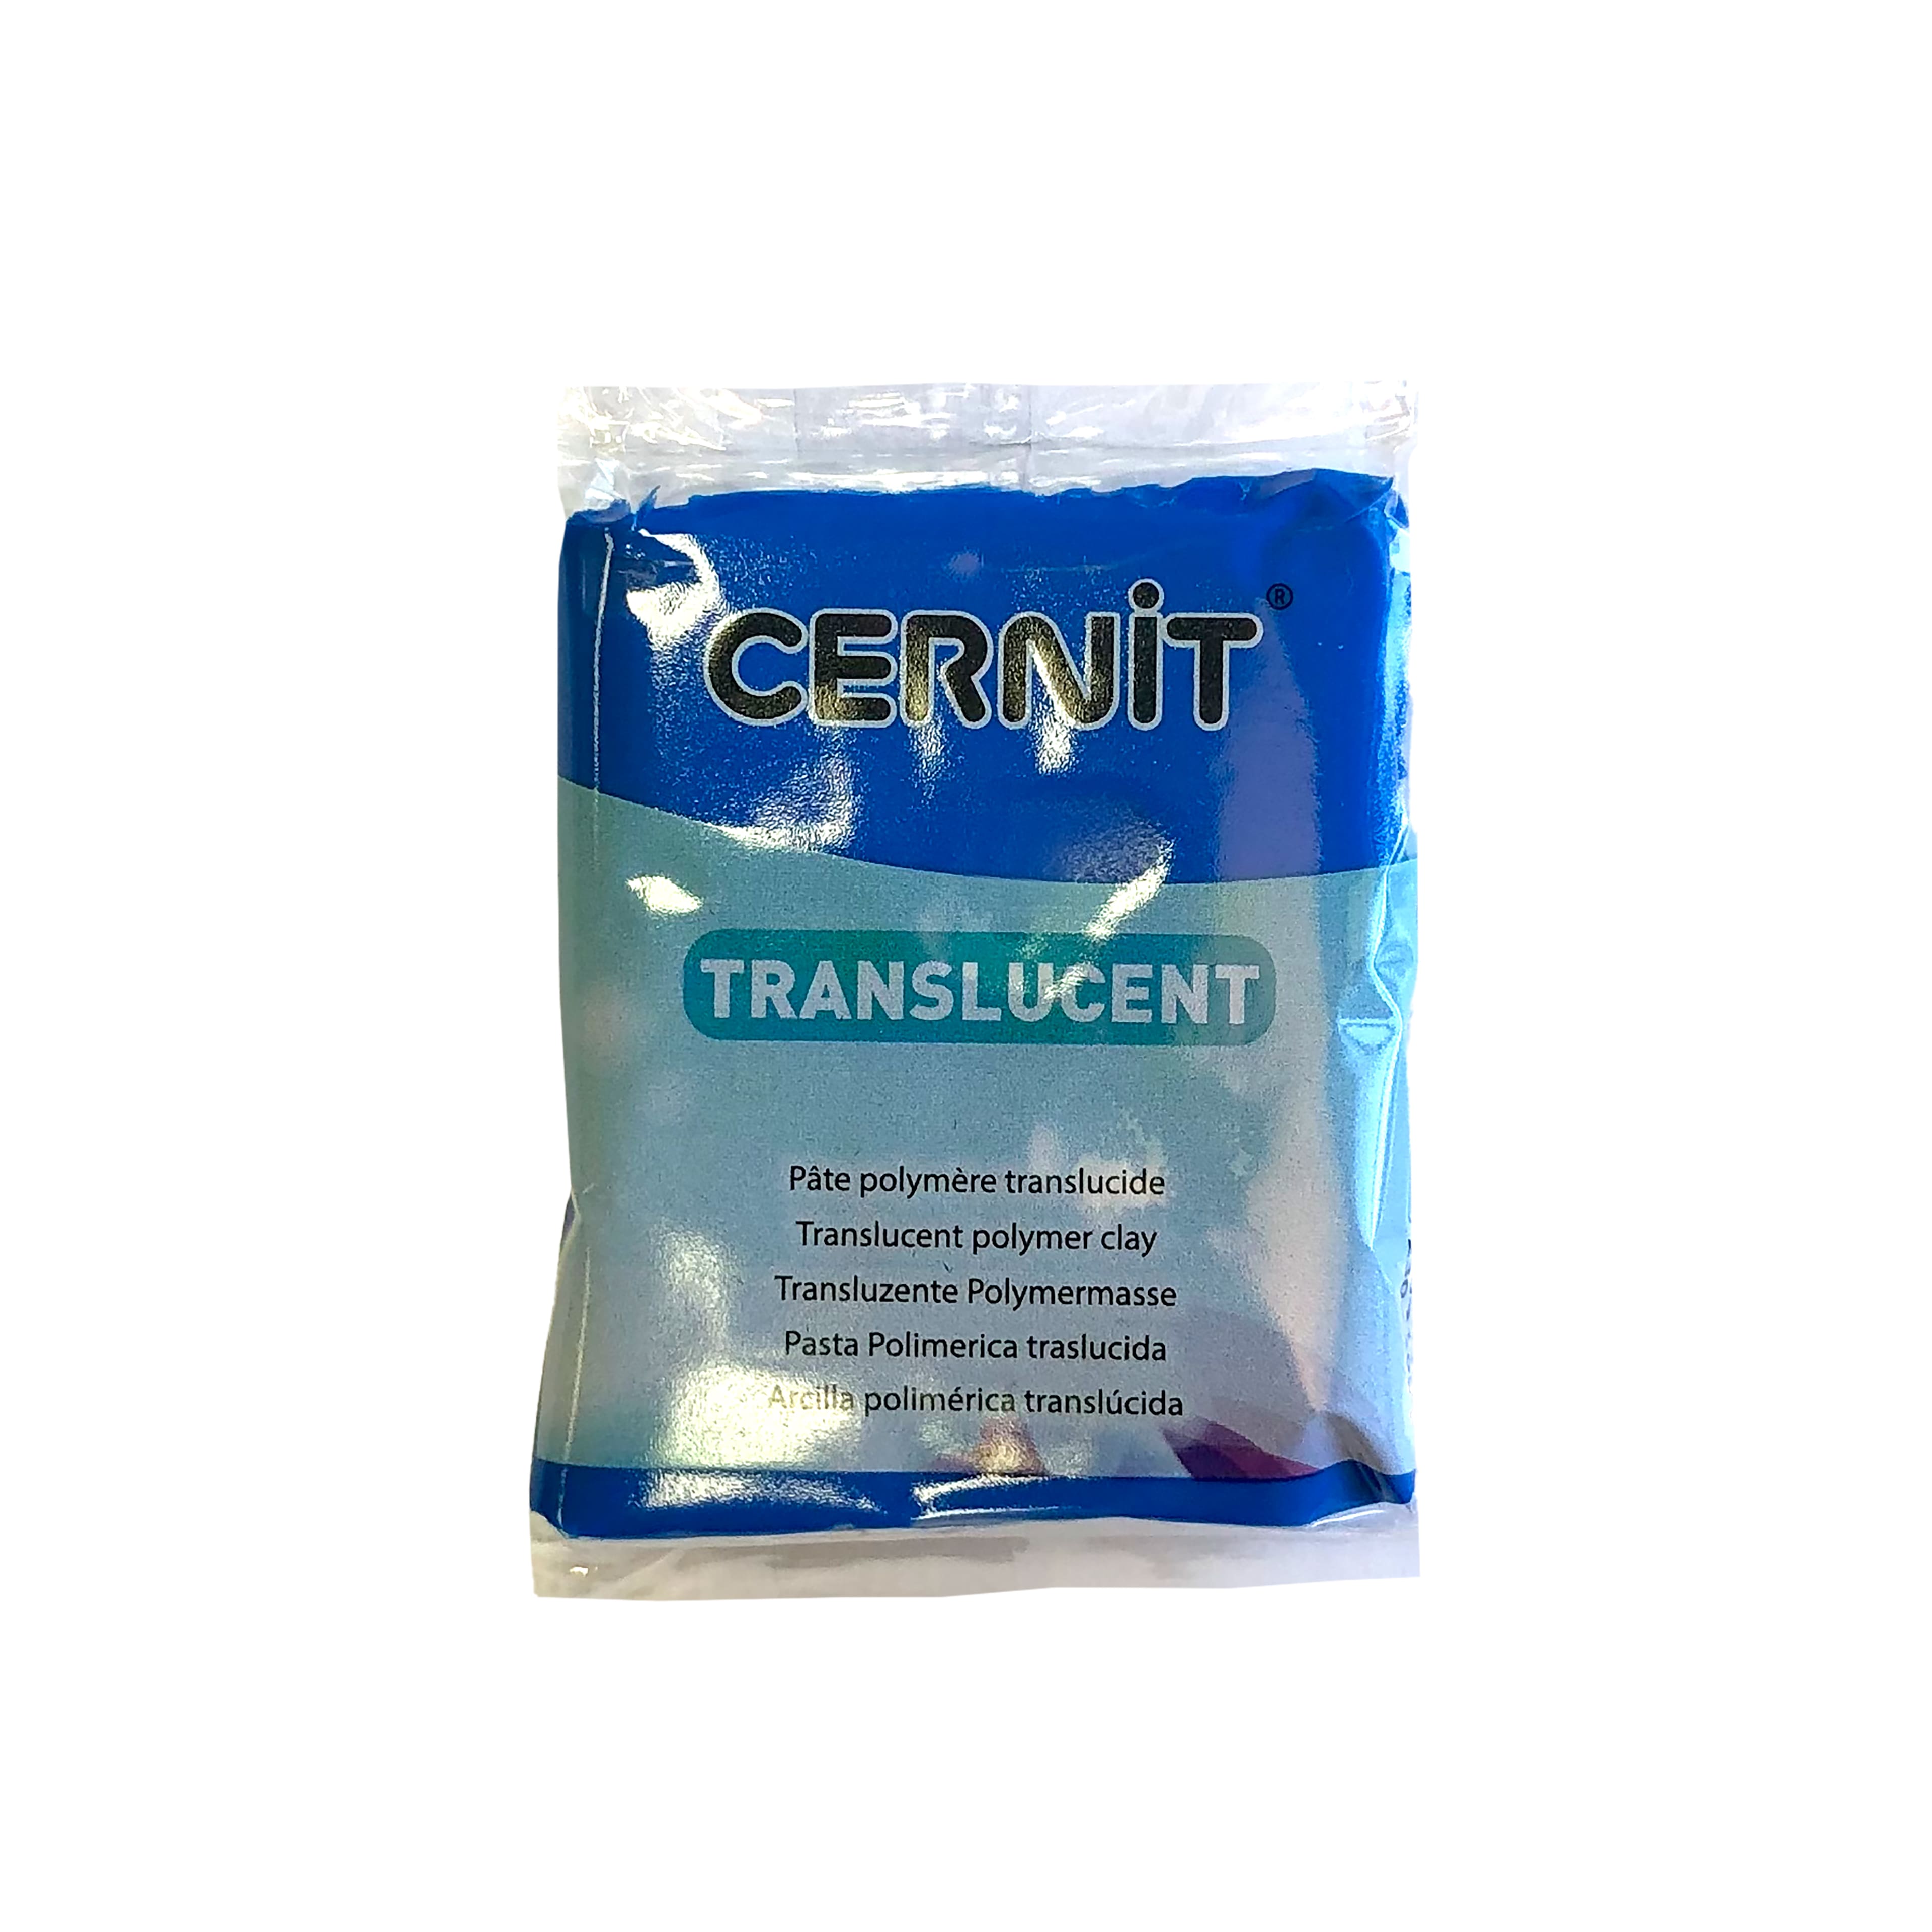 CERNIT Translucent Orange, Nr. 752, Polymer Clay, 56g 2oz, Oven-hardening  Polymer Modeling Clay 